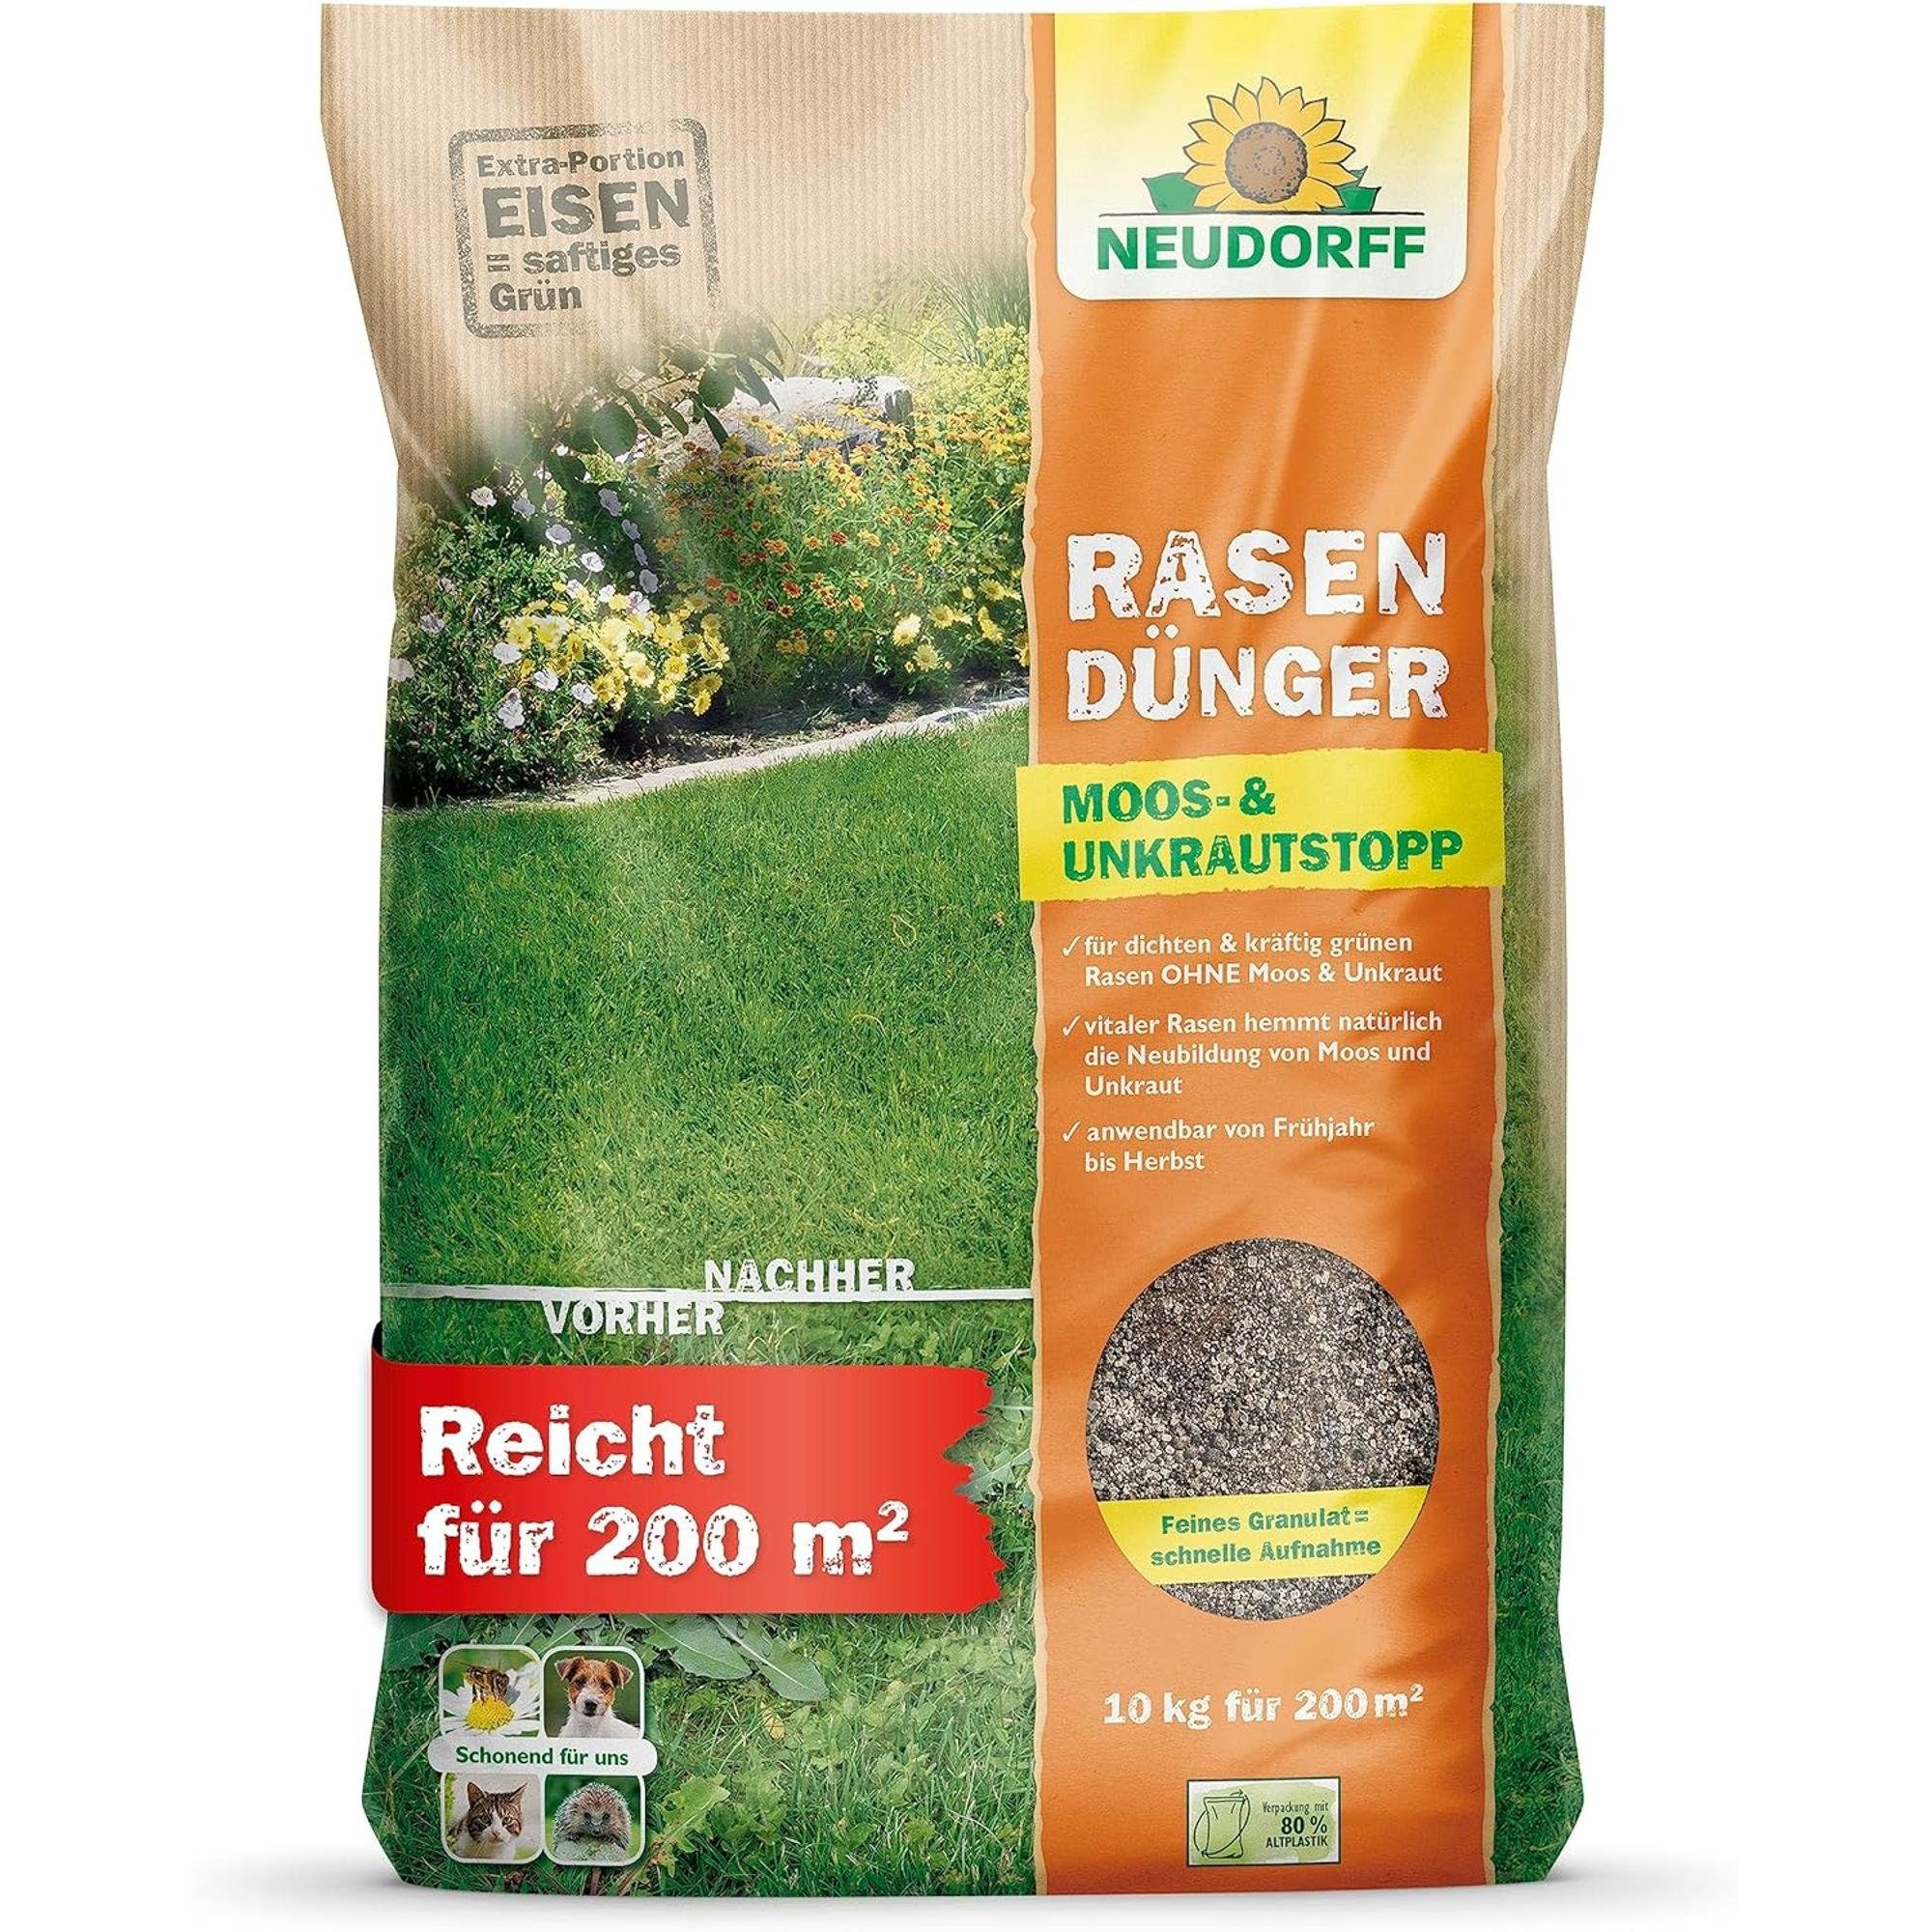 Neudorff Rasendünger RasenDünger Moos- & UnkrautStopp, 10 kg, Verdrängt dauerhaft Unkraut und Moos